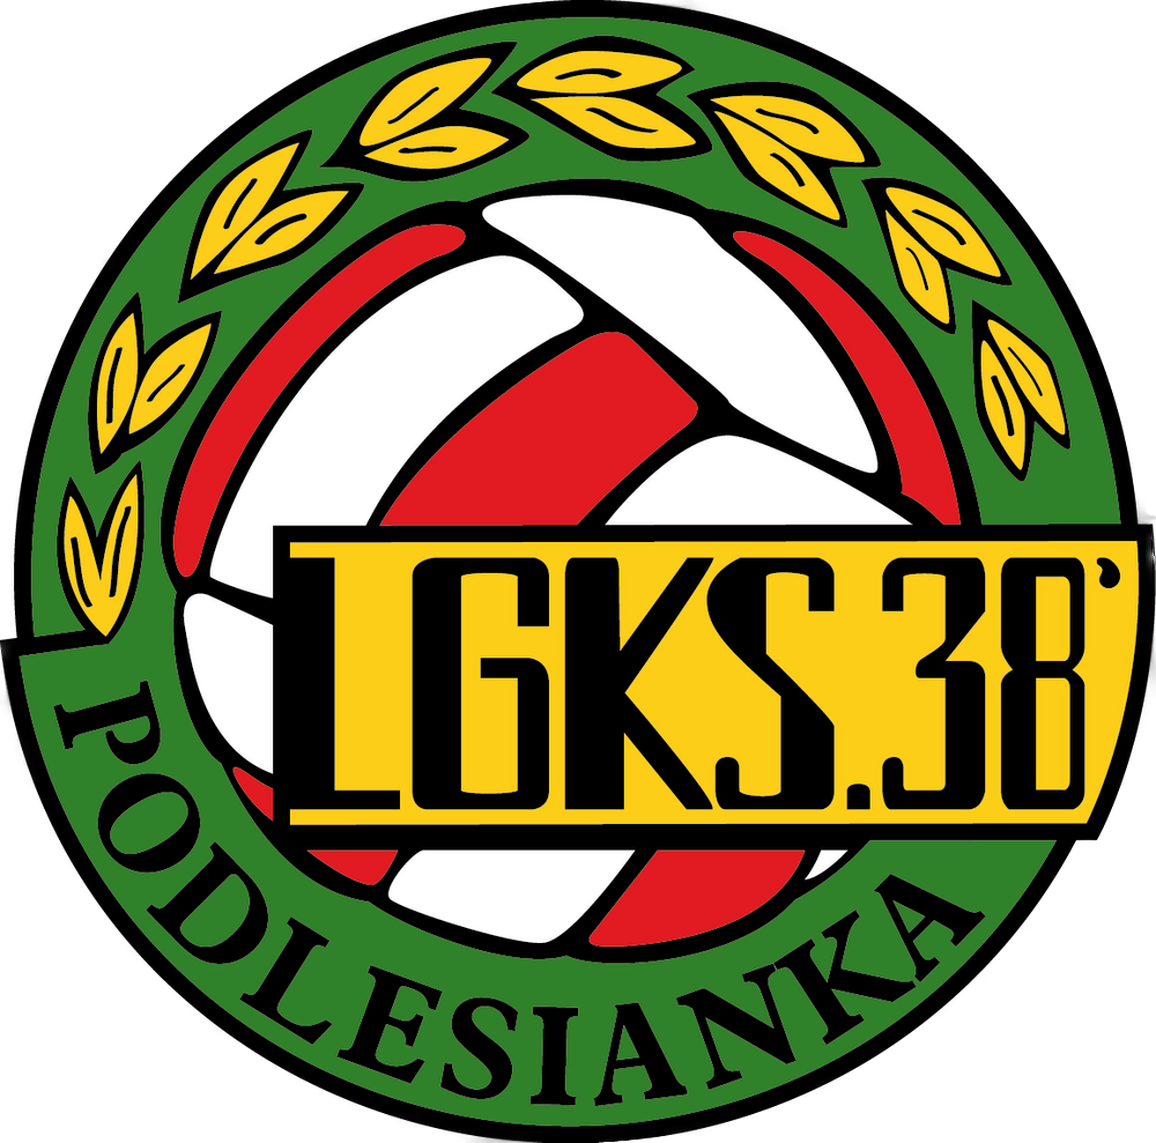 Wappen LGKS 38 Podlesianka Katowice  74271